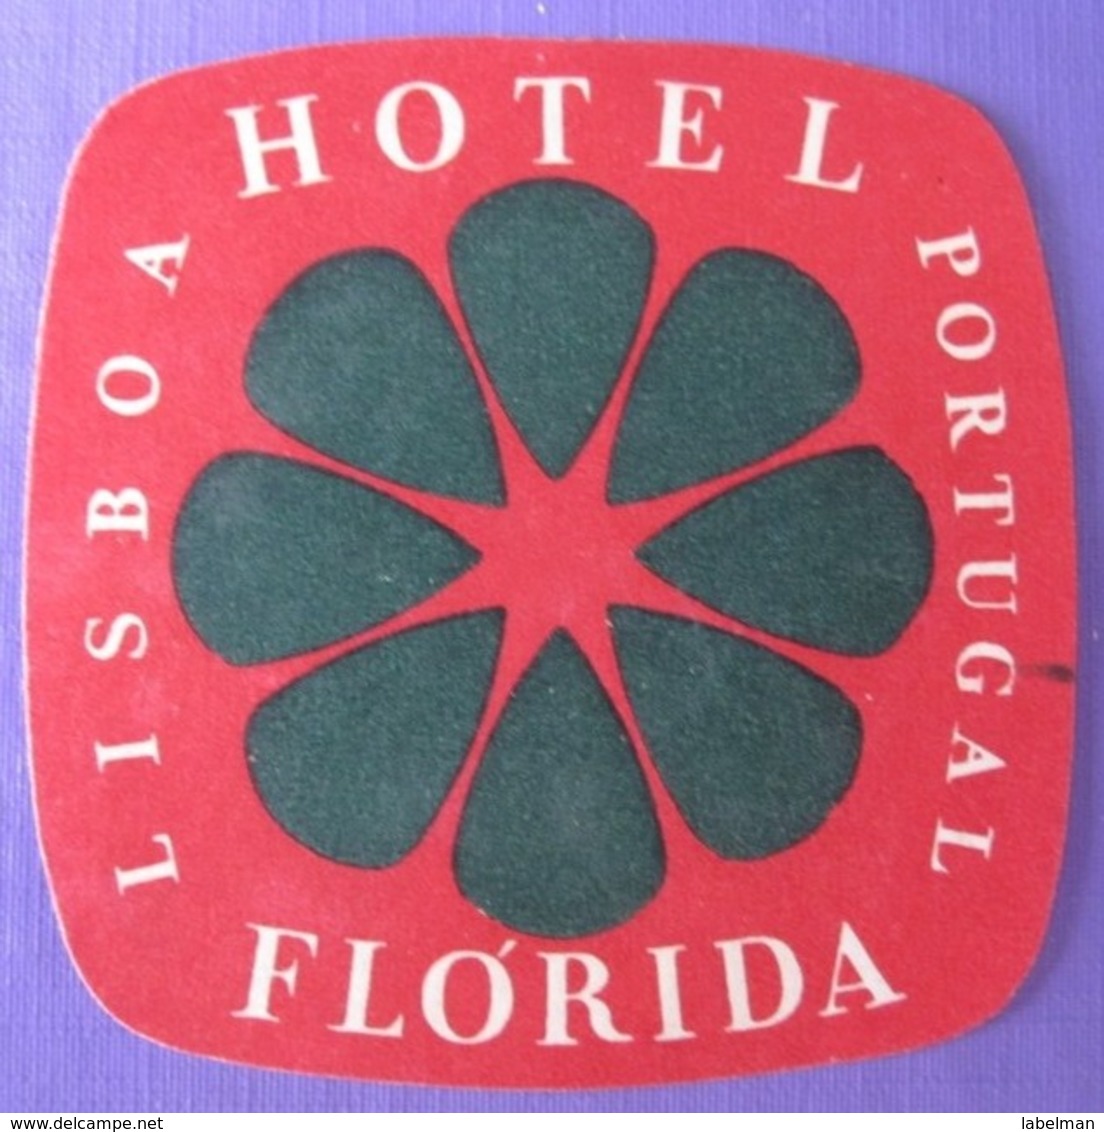 HOTEL PENSAO RESIDENCIAL FLORIDA RED WHITE MINI LISBOA LISBON DECAL STICKER LUGGAGE LABEL ETIQUETTE AUFKLEBER PORTUGAL - Hotel Labels